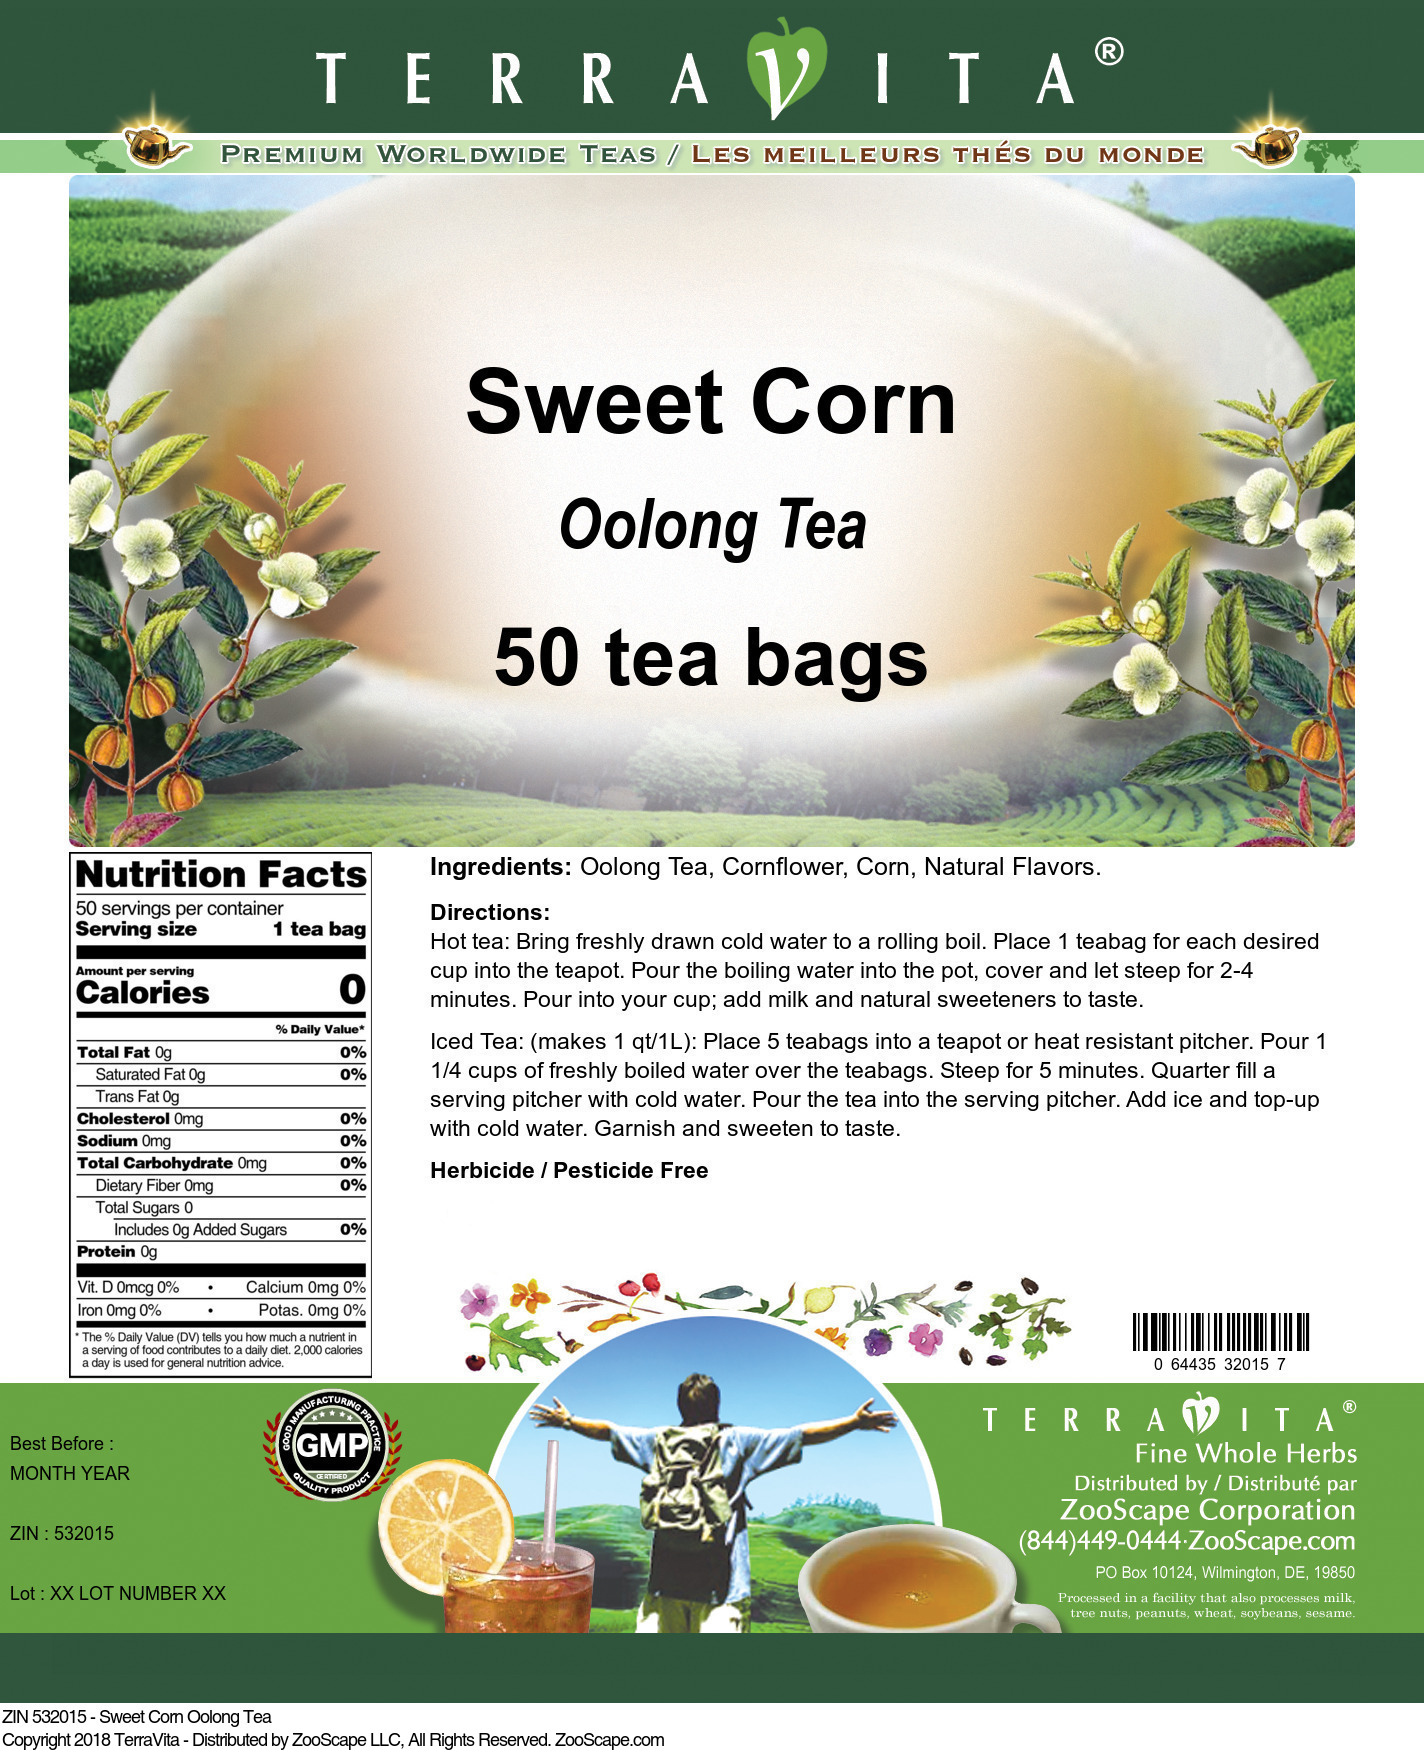 Sweet Corn Oolong Tea - Label